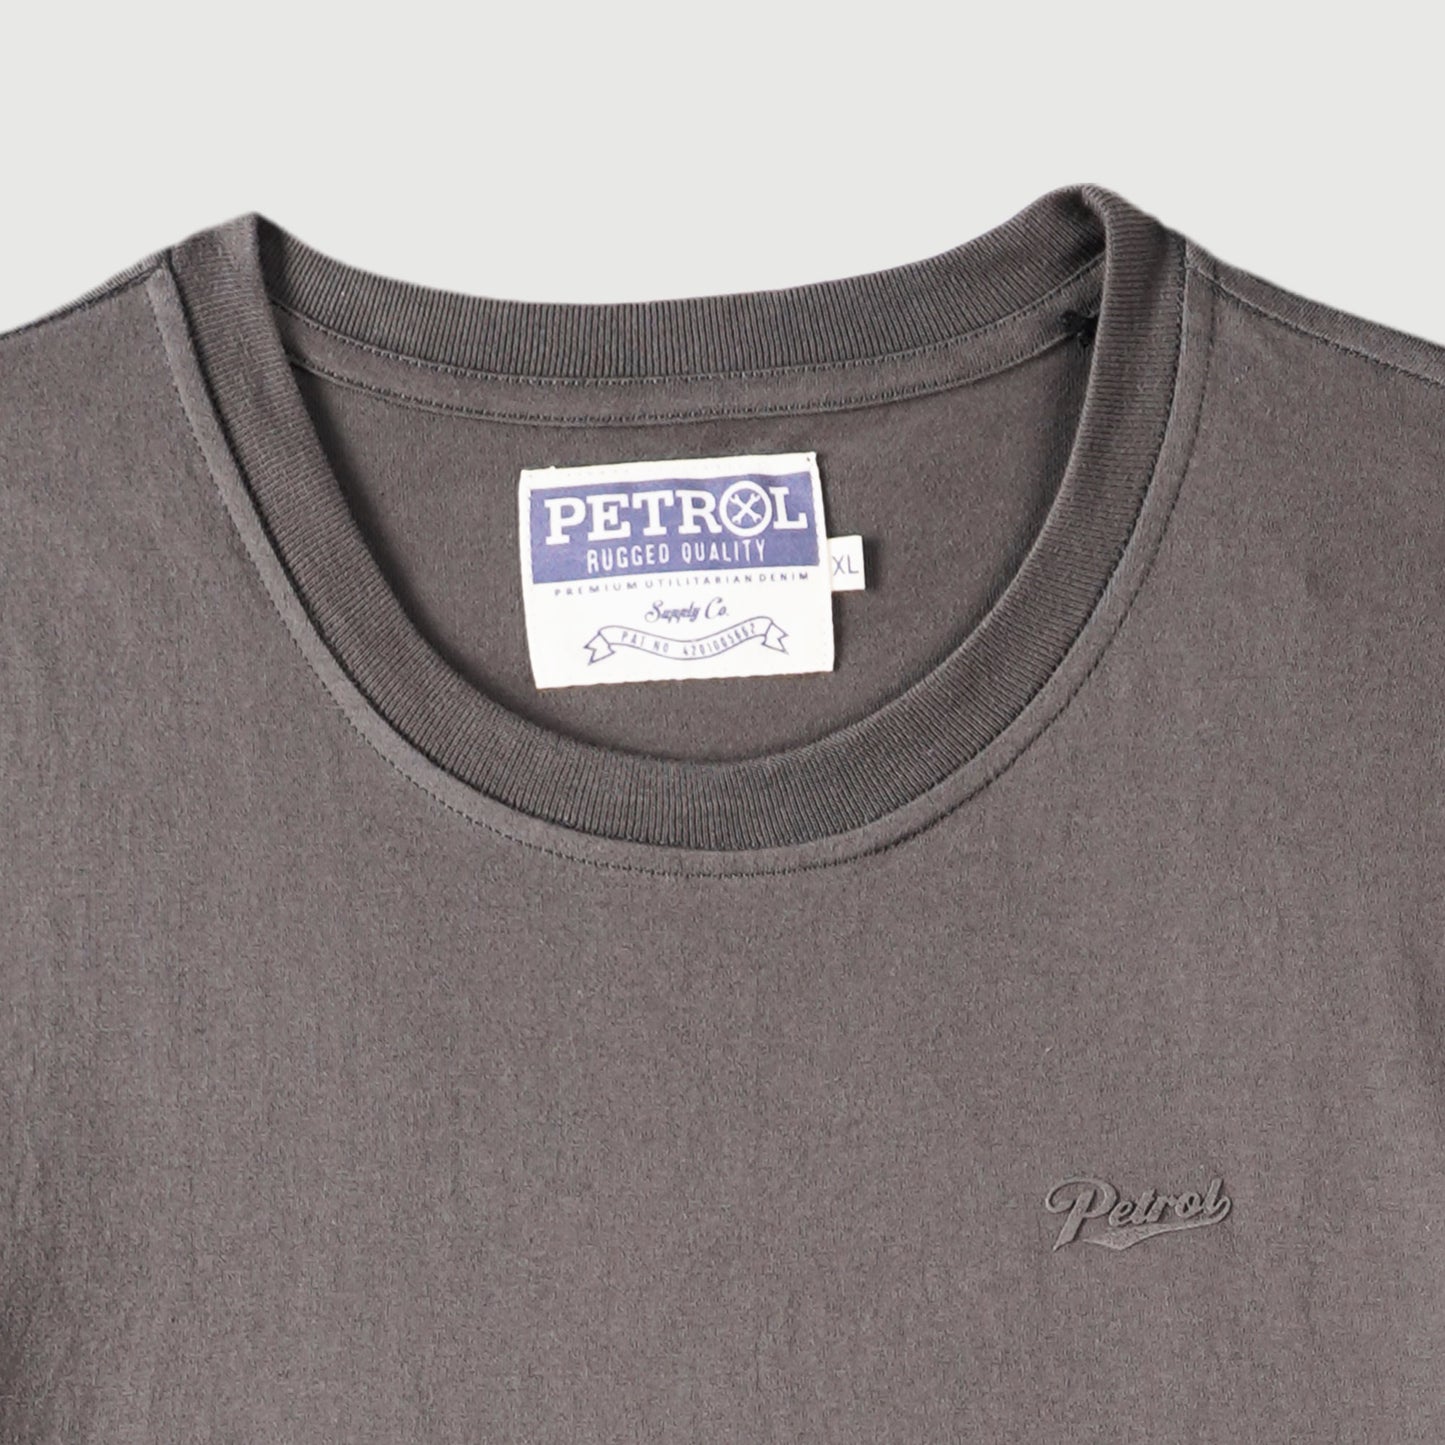 Petrol Basic Tees for Men Slim Fitting Shirt CVC Jersey Fabric Trendy fashion Casual Top T-shirt for Men 146950-U (Charcoal)